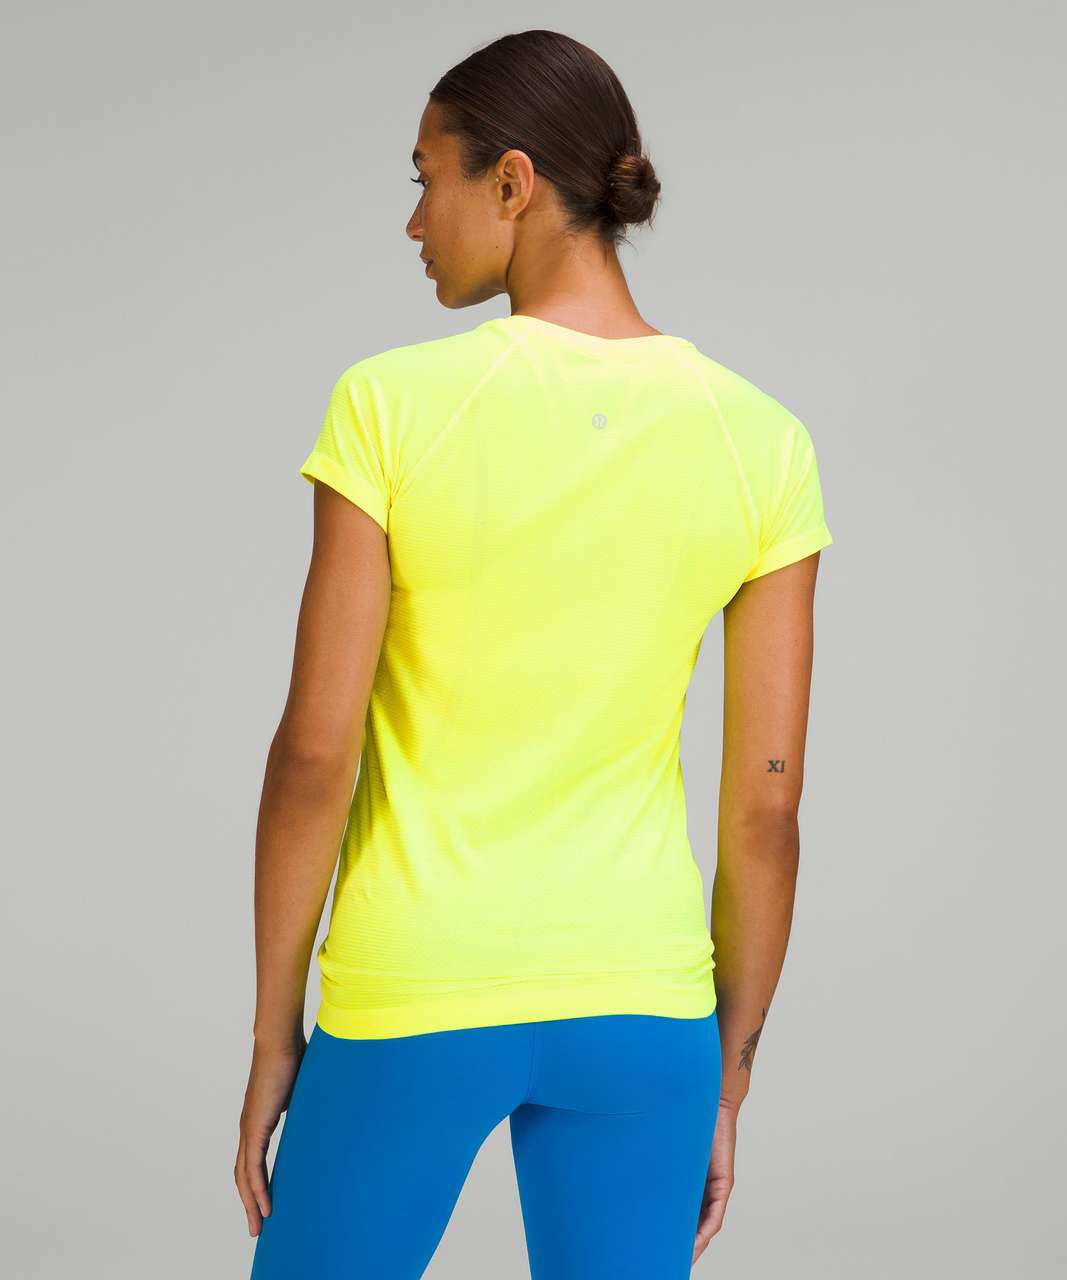 Lululemon Swiftly Tech Short Sleeve Shirt 2.0 - Highlight Yellow / Highlight Yellow